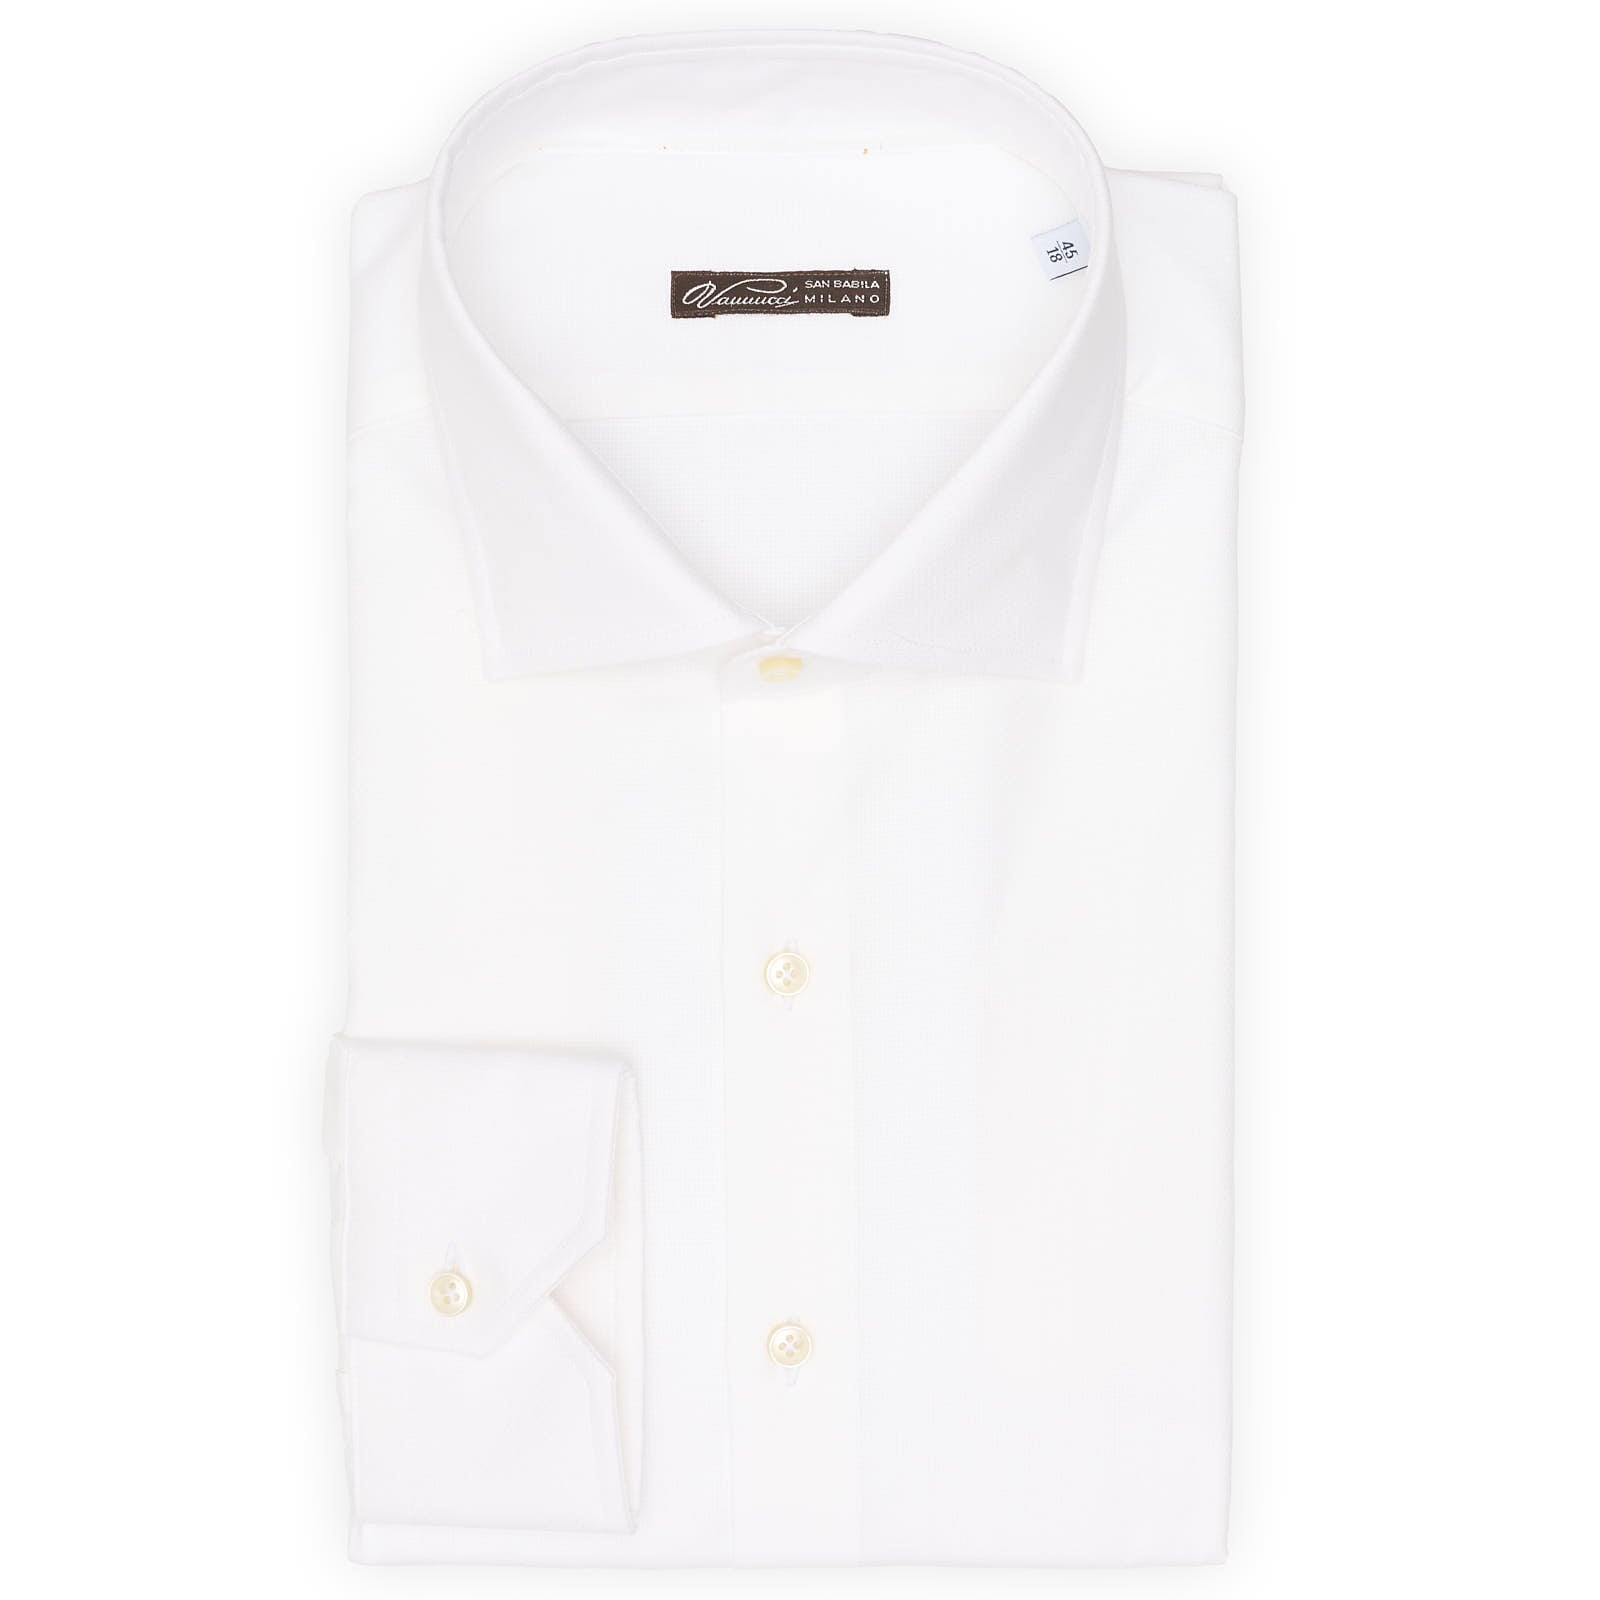 VANNUCCI Milano White Royal Oxford Cotton Dress Shirt EU 45 NEW US 18